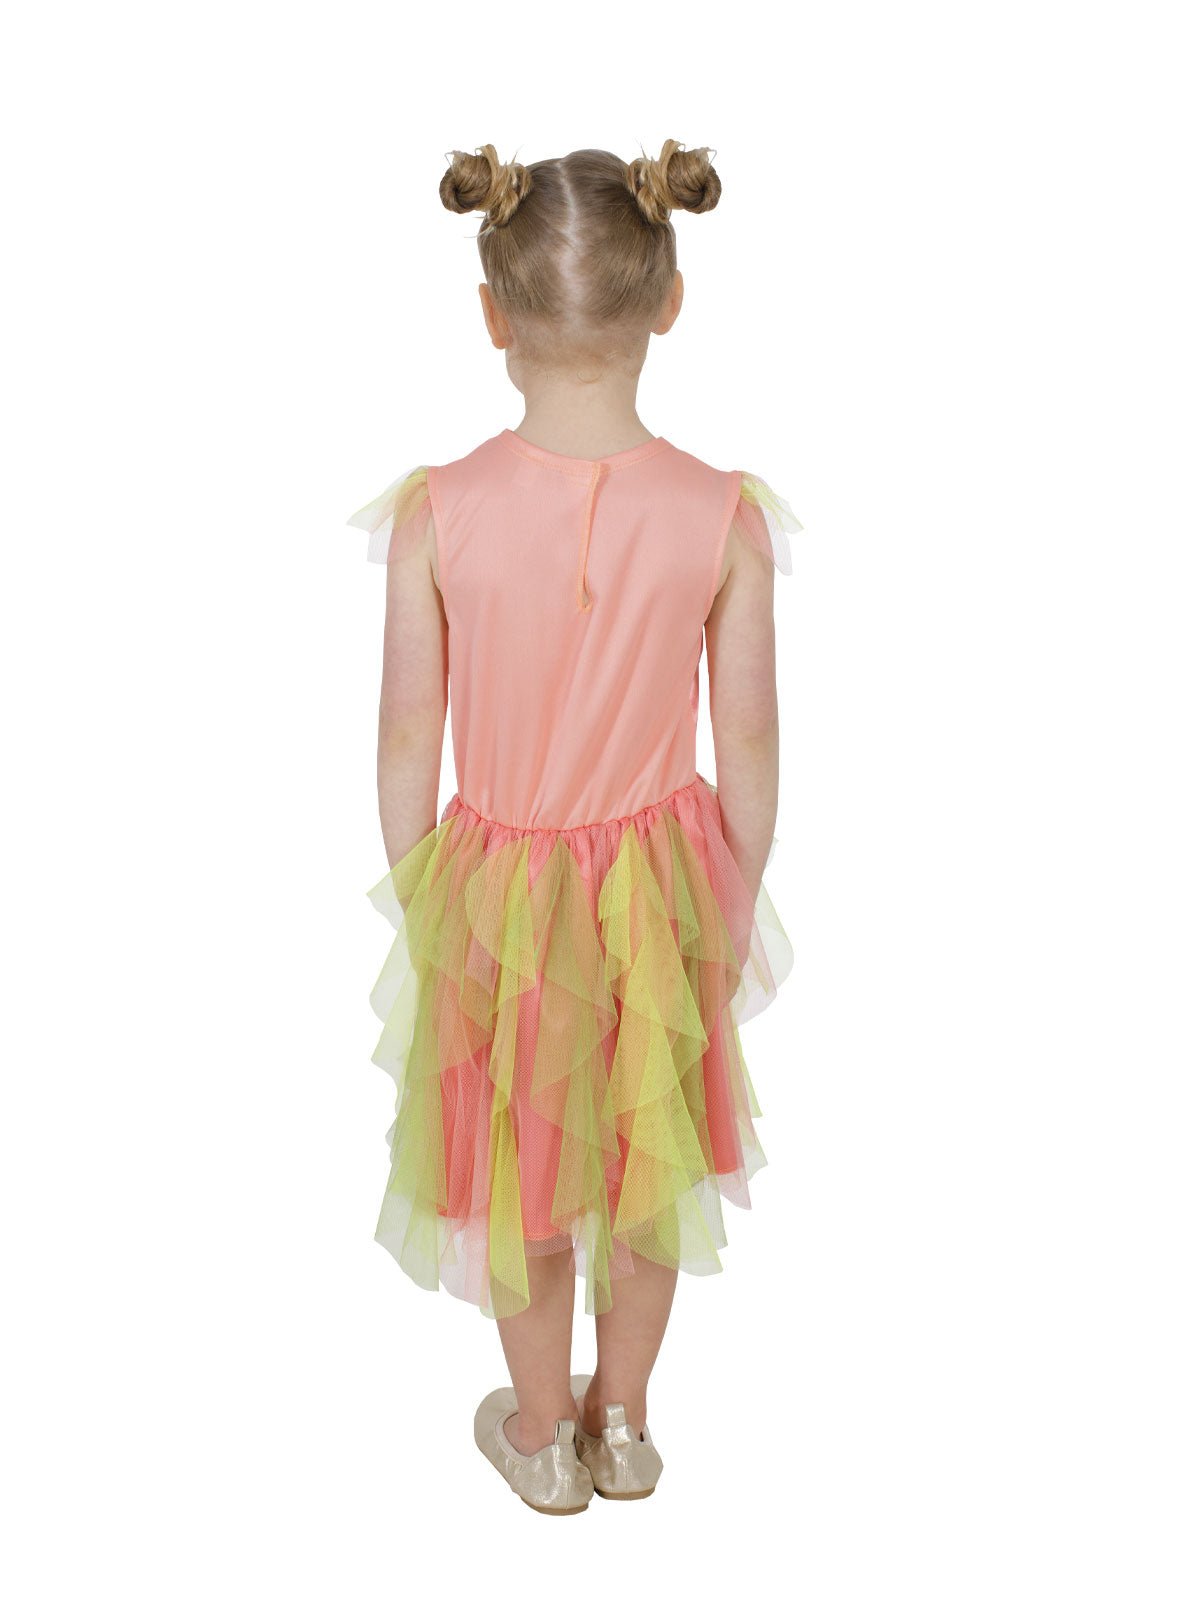 Australiana Imagery Tutu Dress for Kids